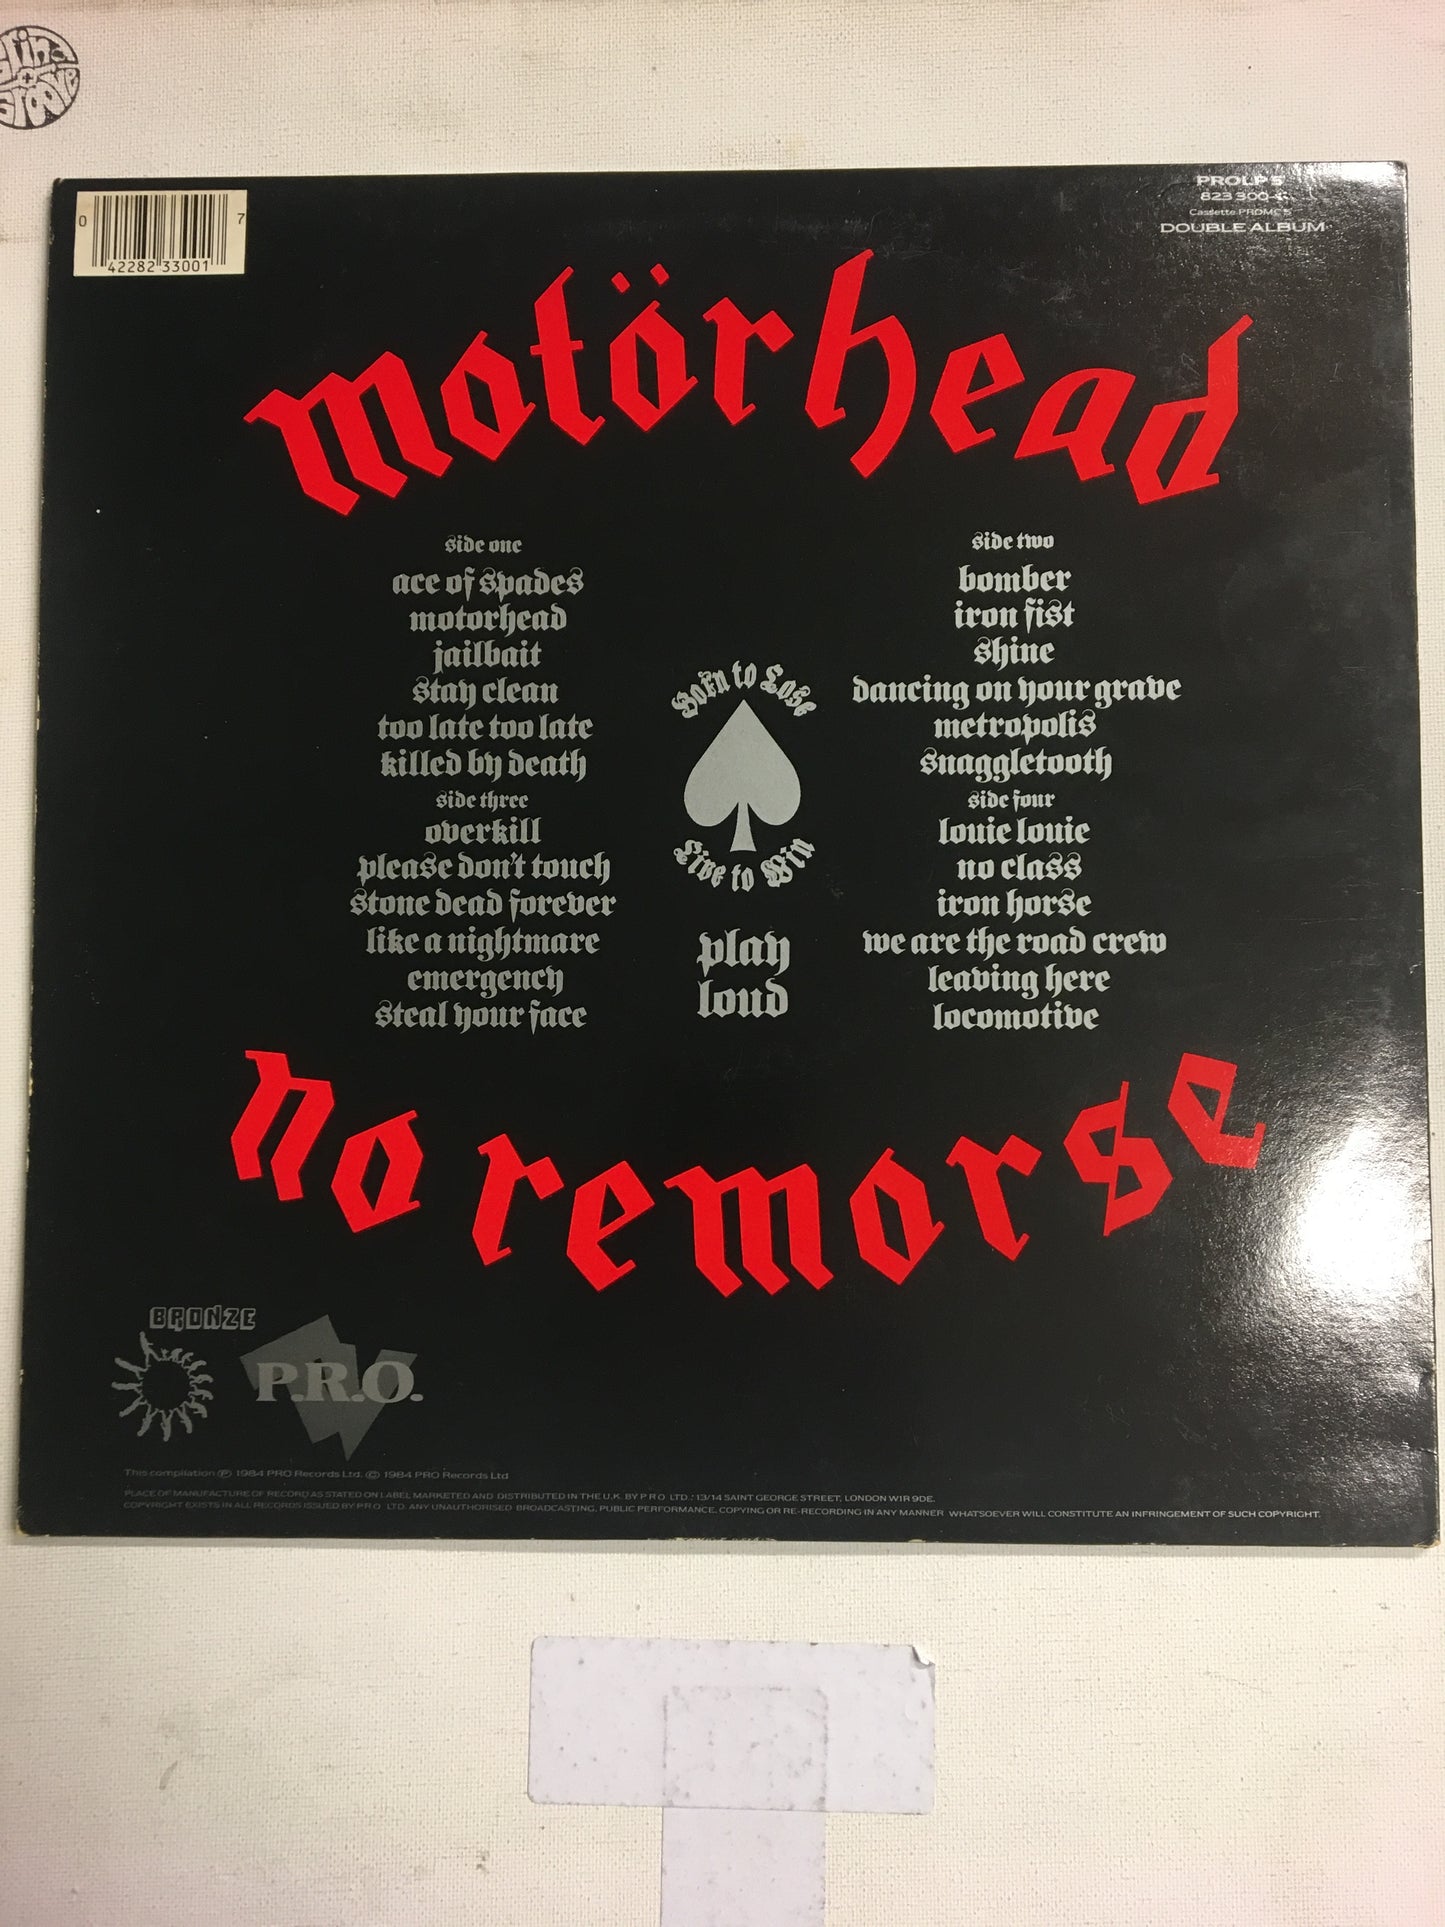 MOTORHEAD LP NO REMORSE